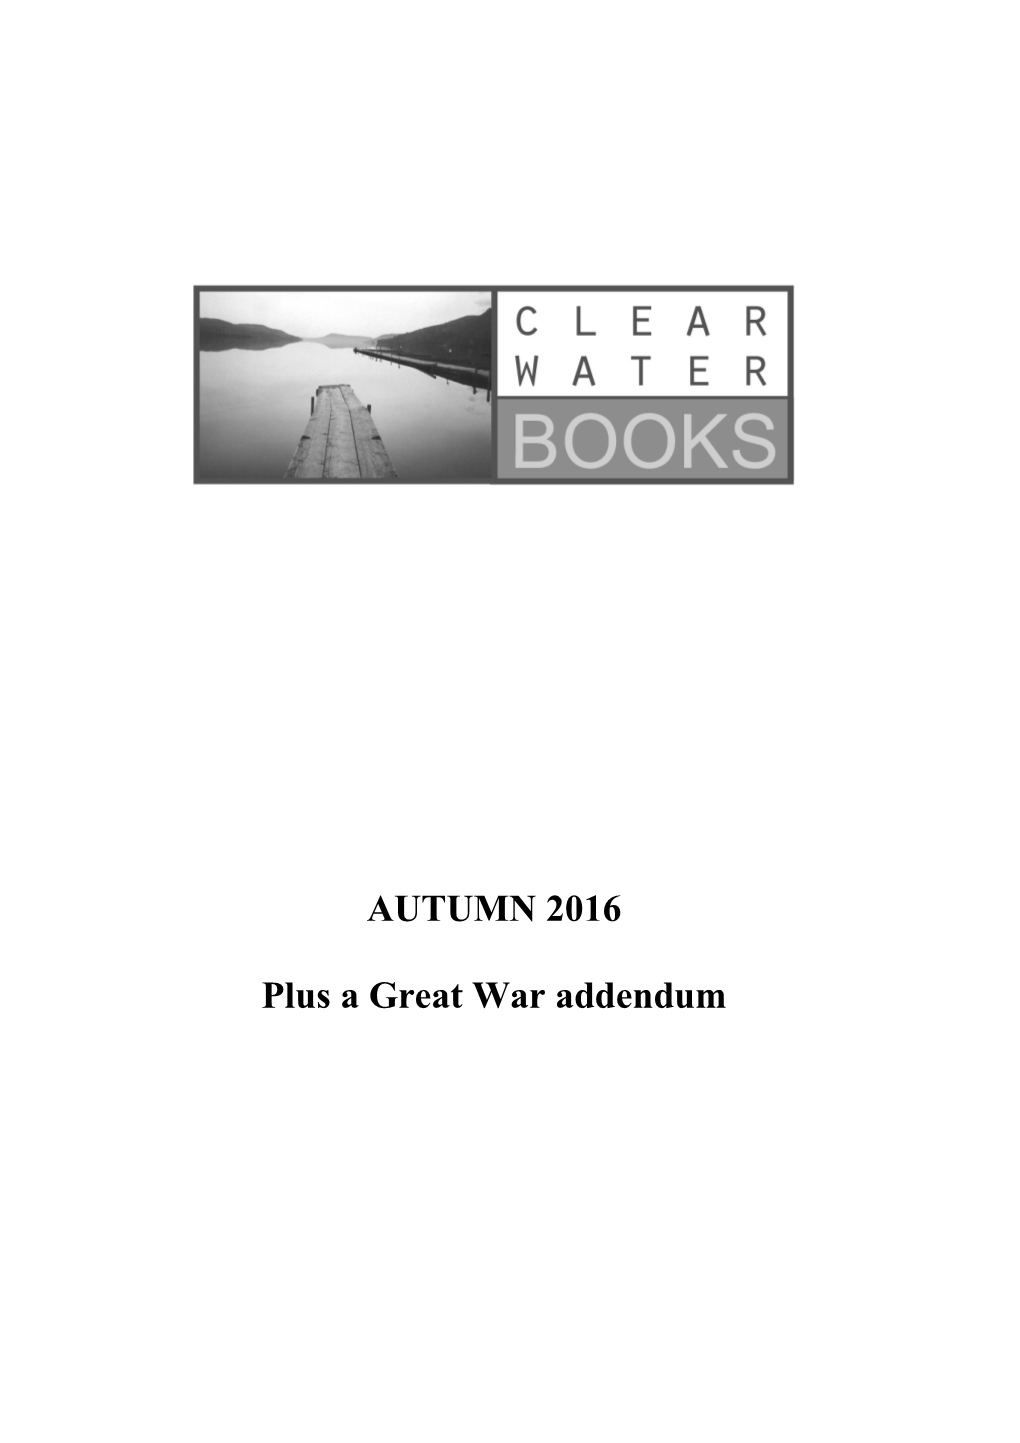 AUTUMN 2016 Plus a Great War Addendum